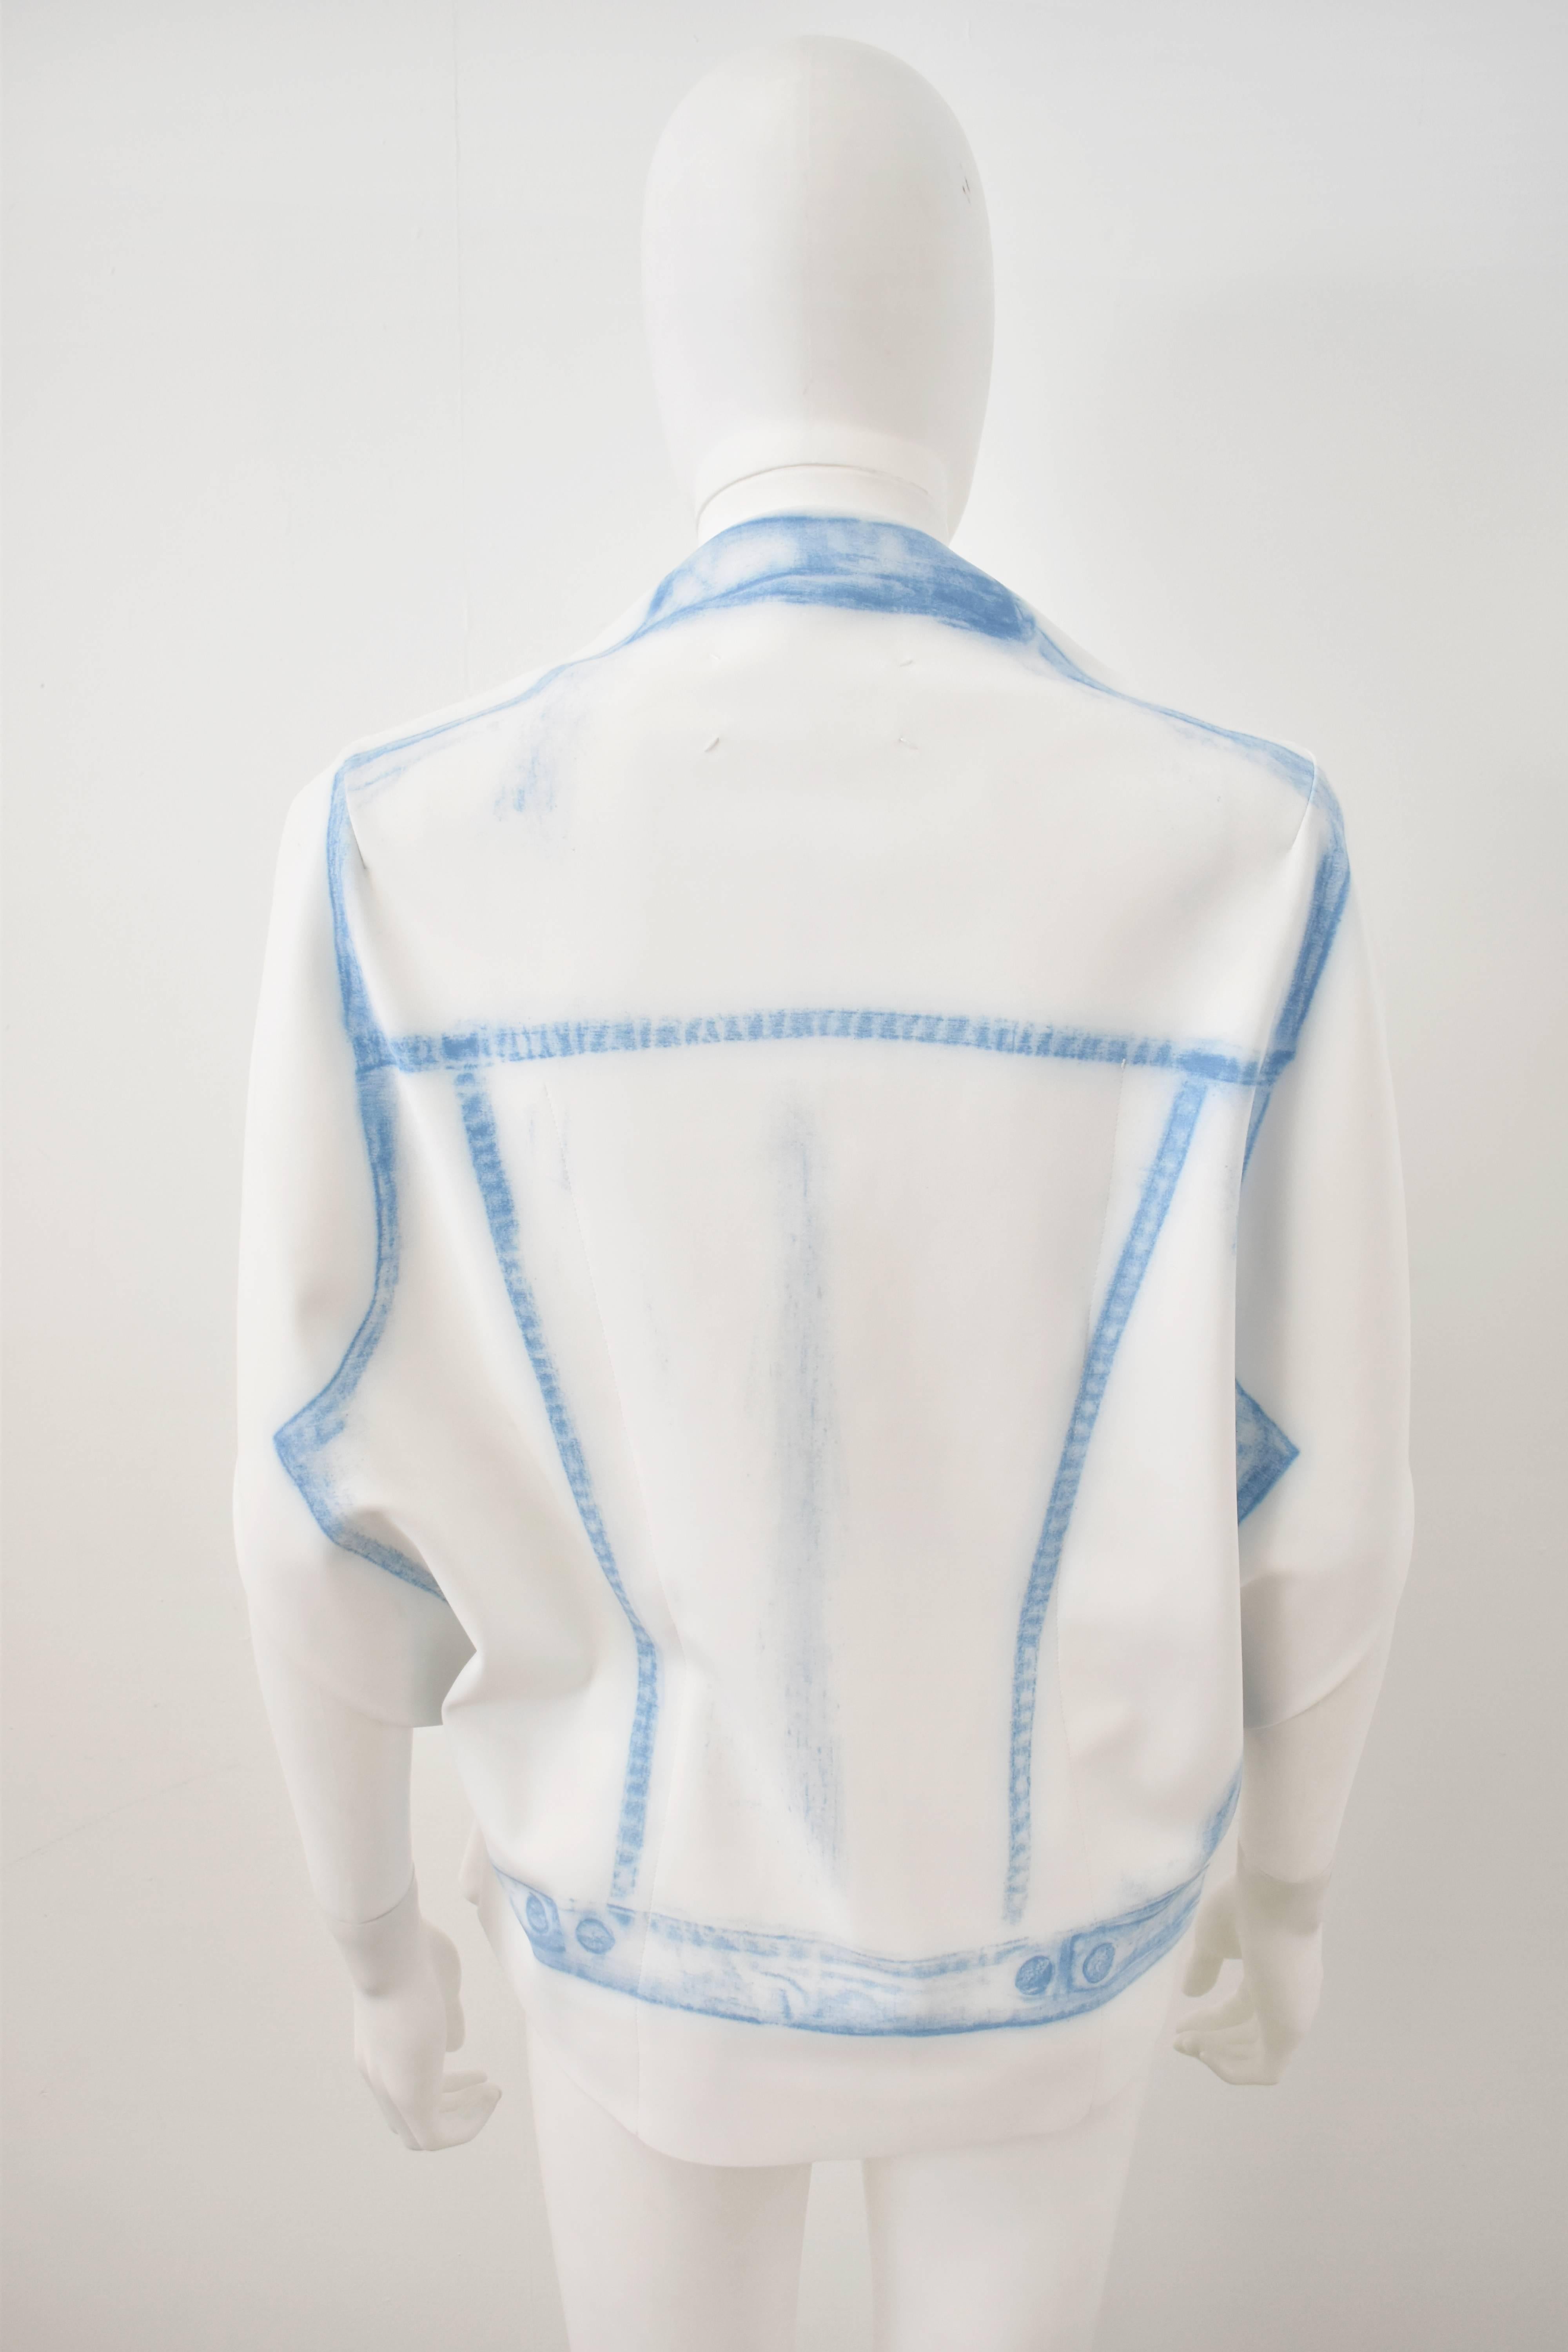 Gray Maison Martin Margiela ‘Denim Jacket’ Print Trompe L’oeil Cape Top